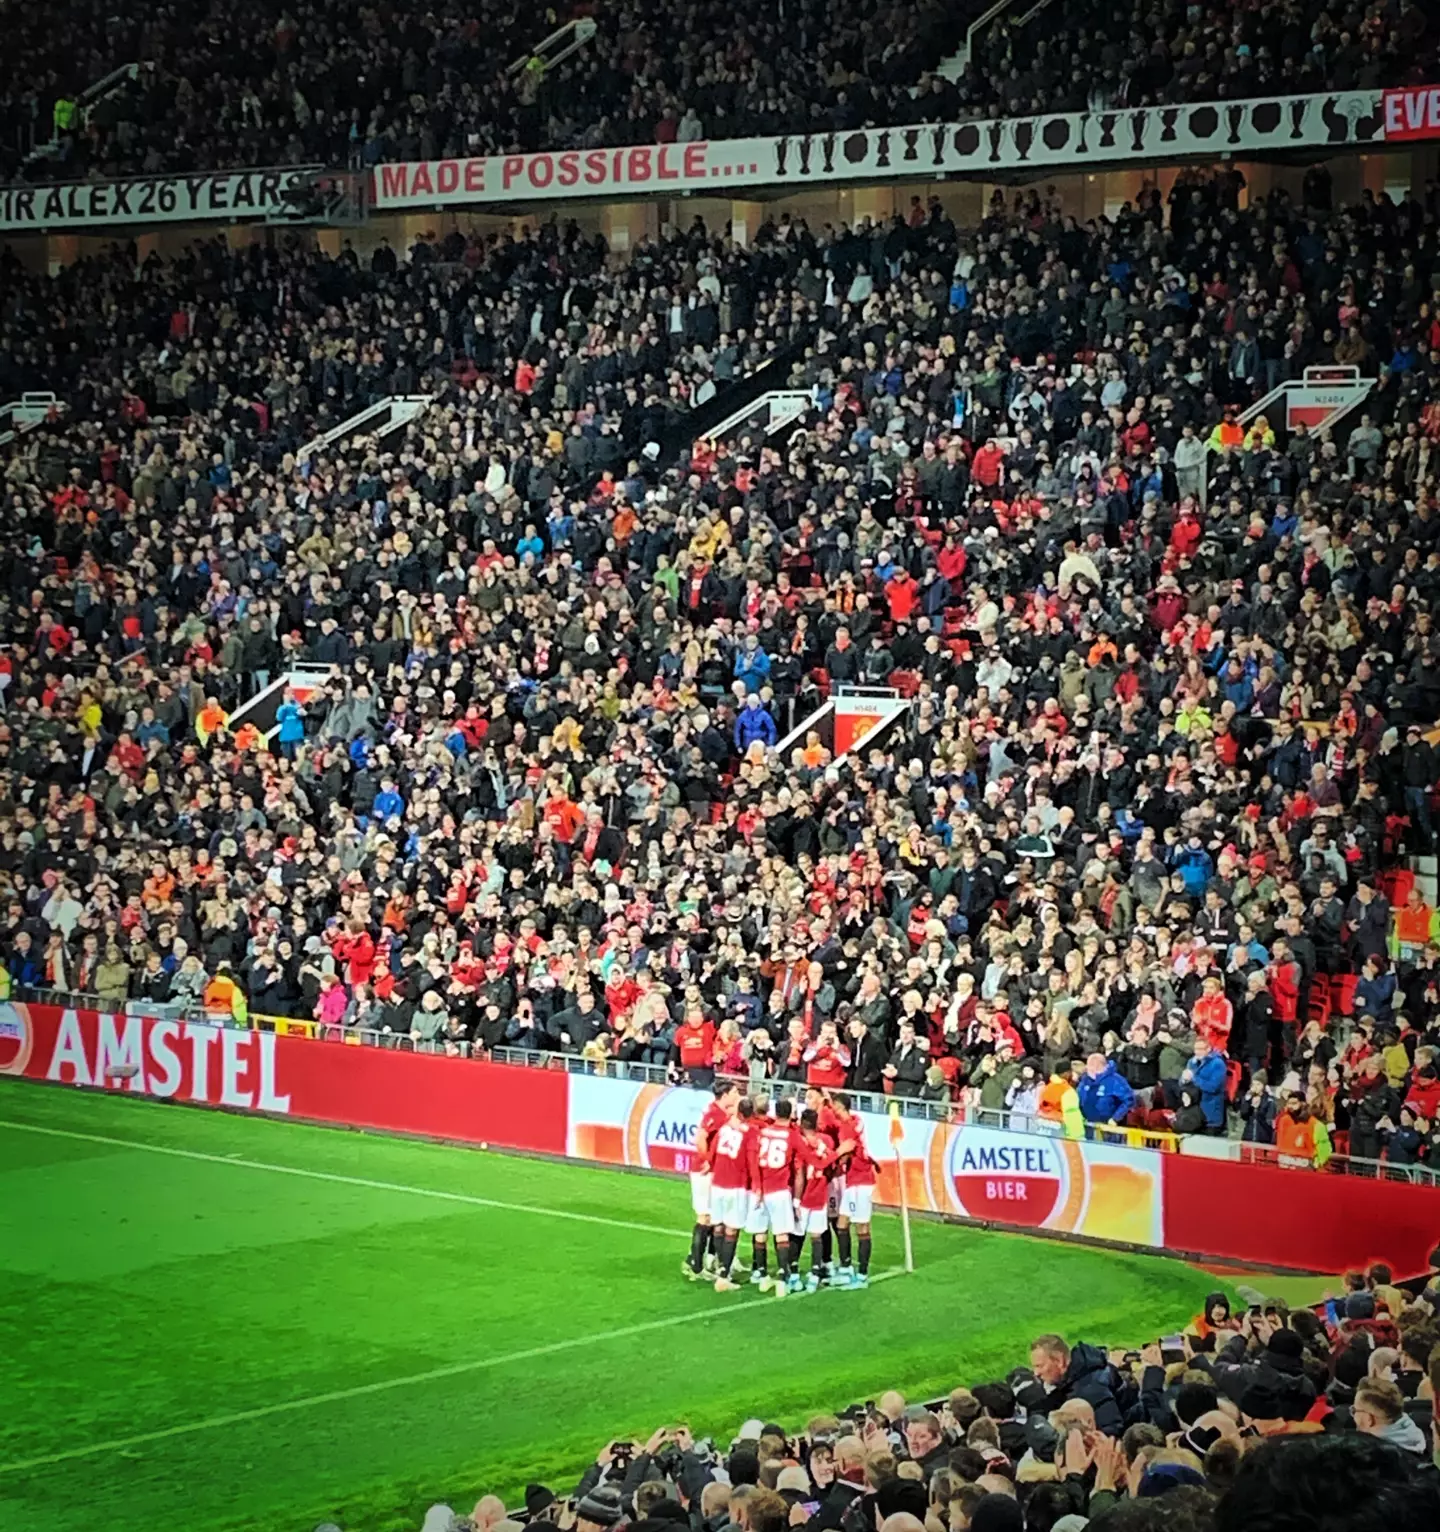 Old Trafford crowd. Image